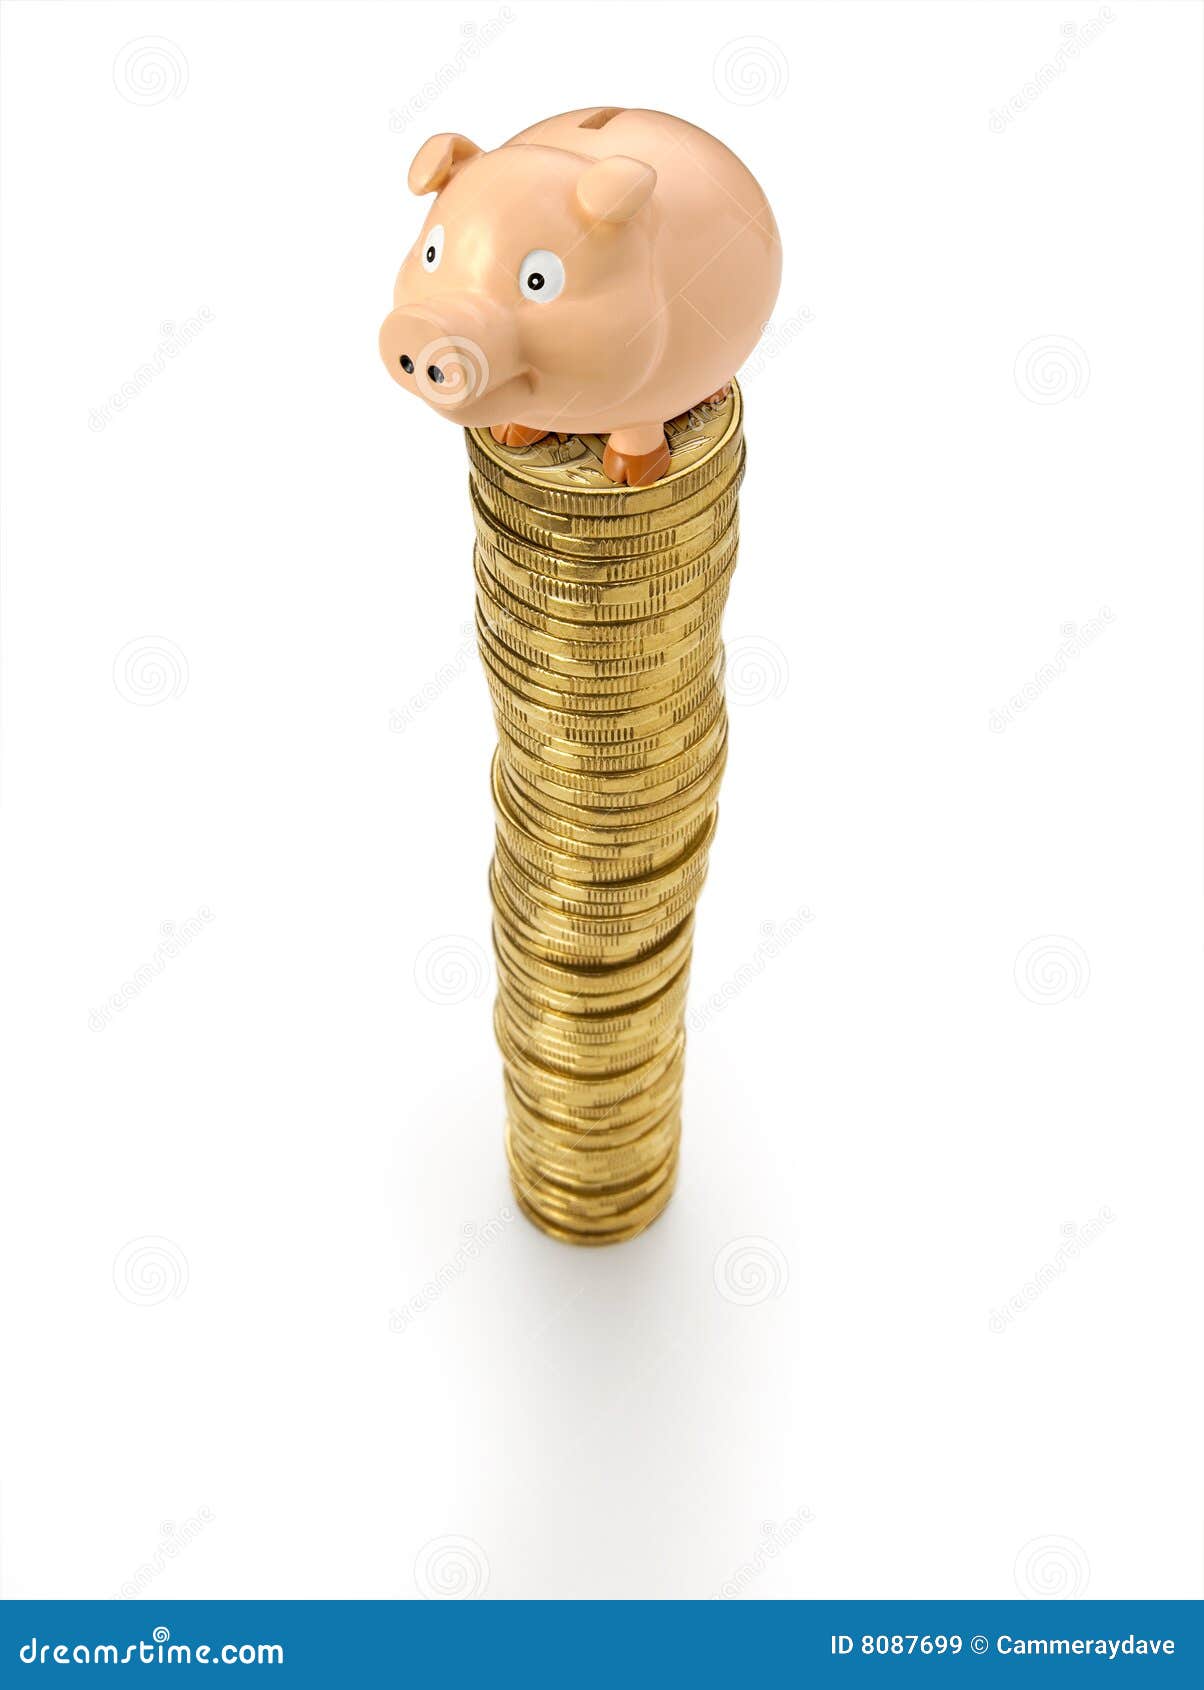 piggy bank coins stack money